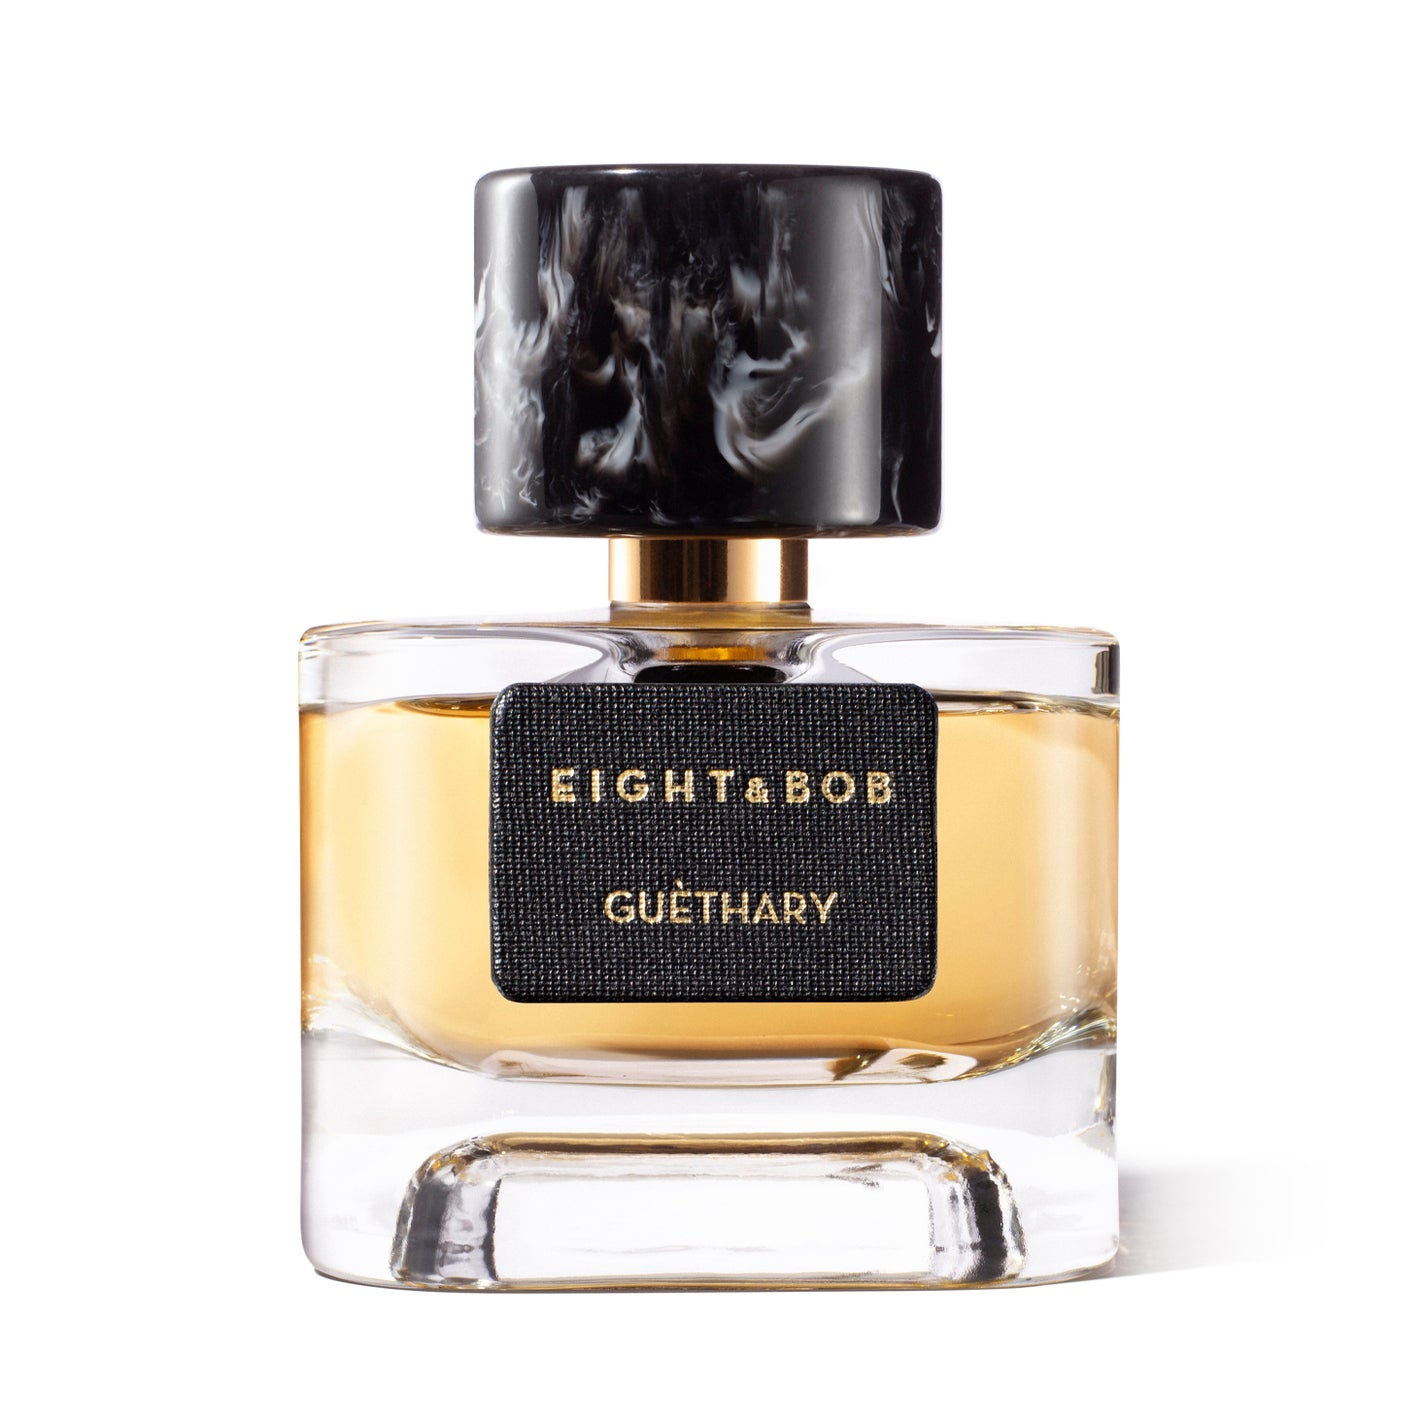 Eight & Bob Guéthary Extrait de Parfum - 50ml